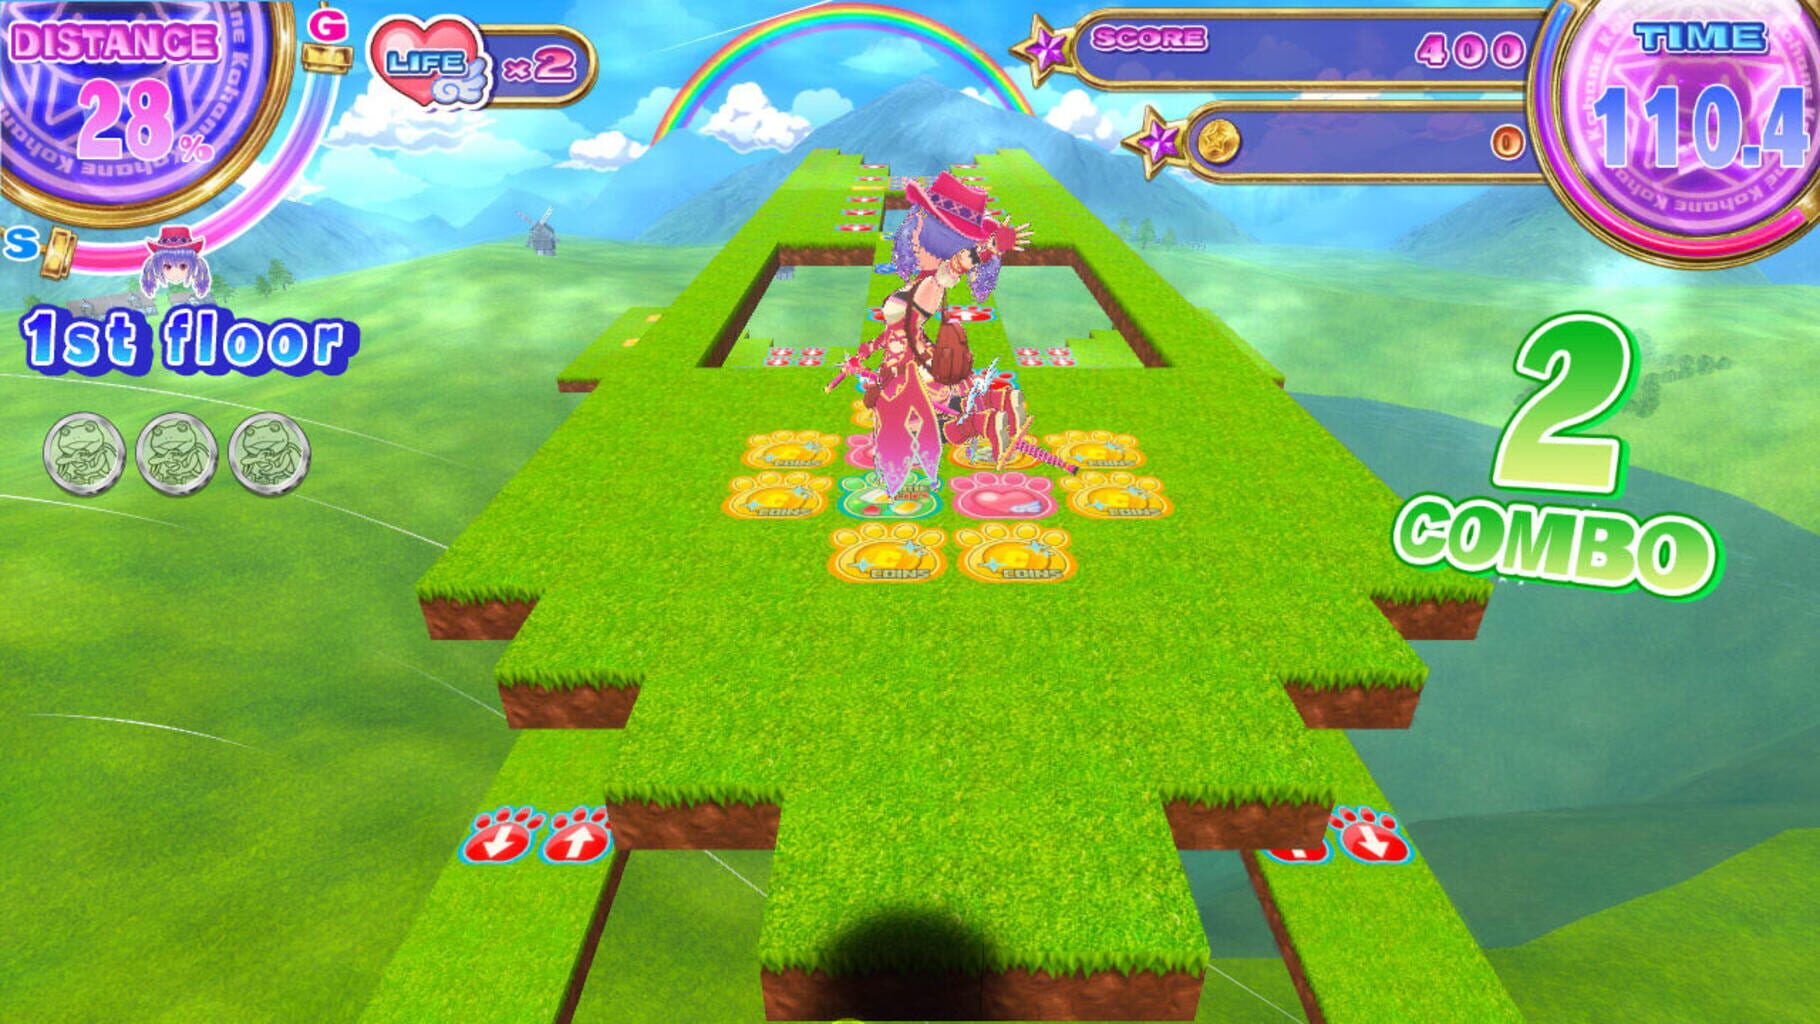 Hopping girl Kohane Jumping Kingdom: Princess of the Black Rabbit screenshot